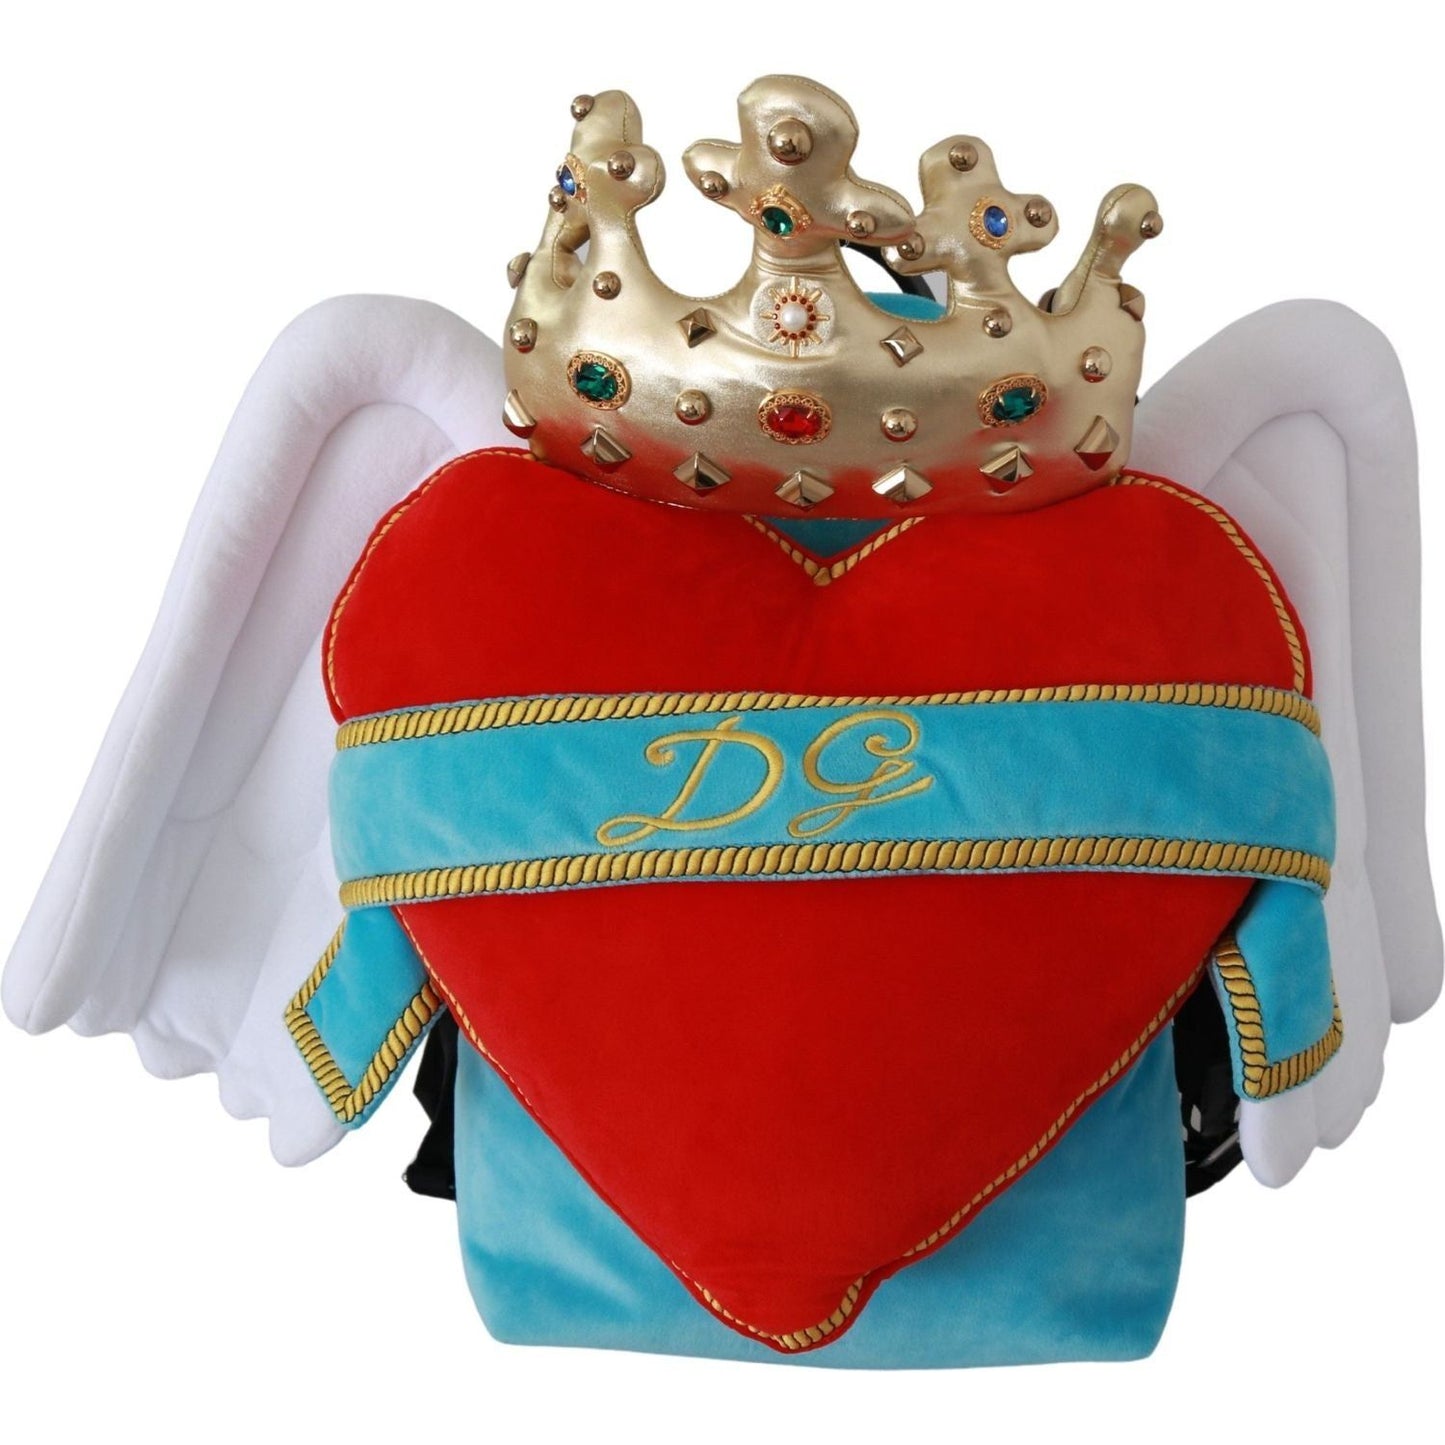 Dolce & Gabbana Jeweled Heart Wings Backpack Backpack red-blue-heart-wings-dg-crown-school-backpack IMG_9790-8f9426c0-3b4.jpg